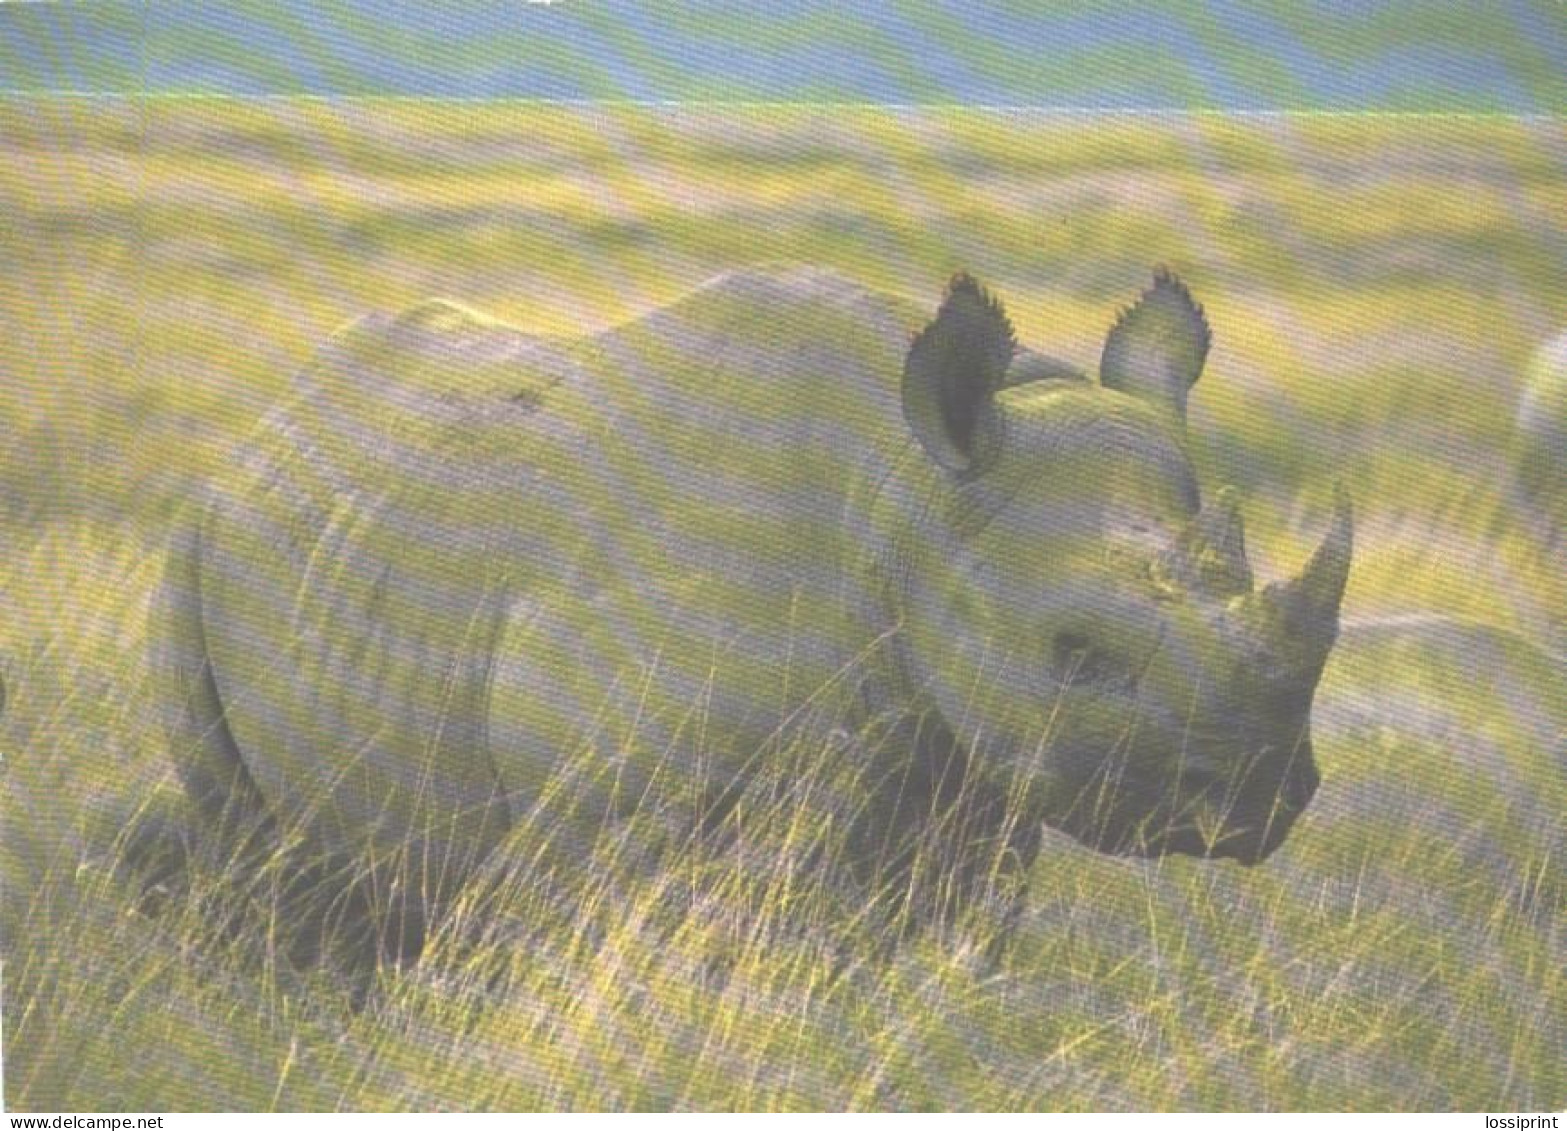 Rhinoceros, Ngorongoro Crater - Rhinozeros